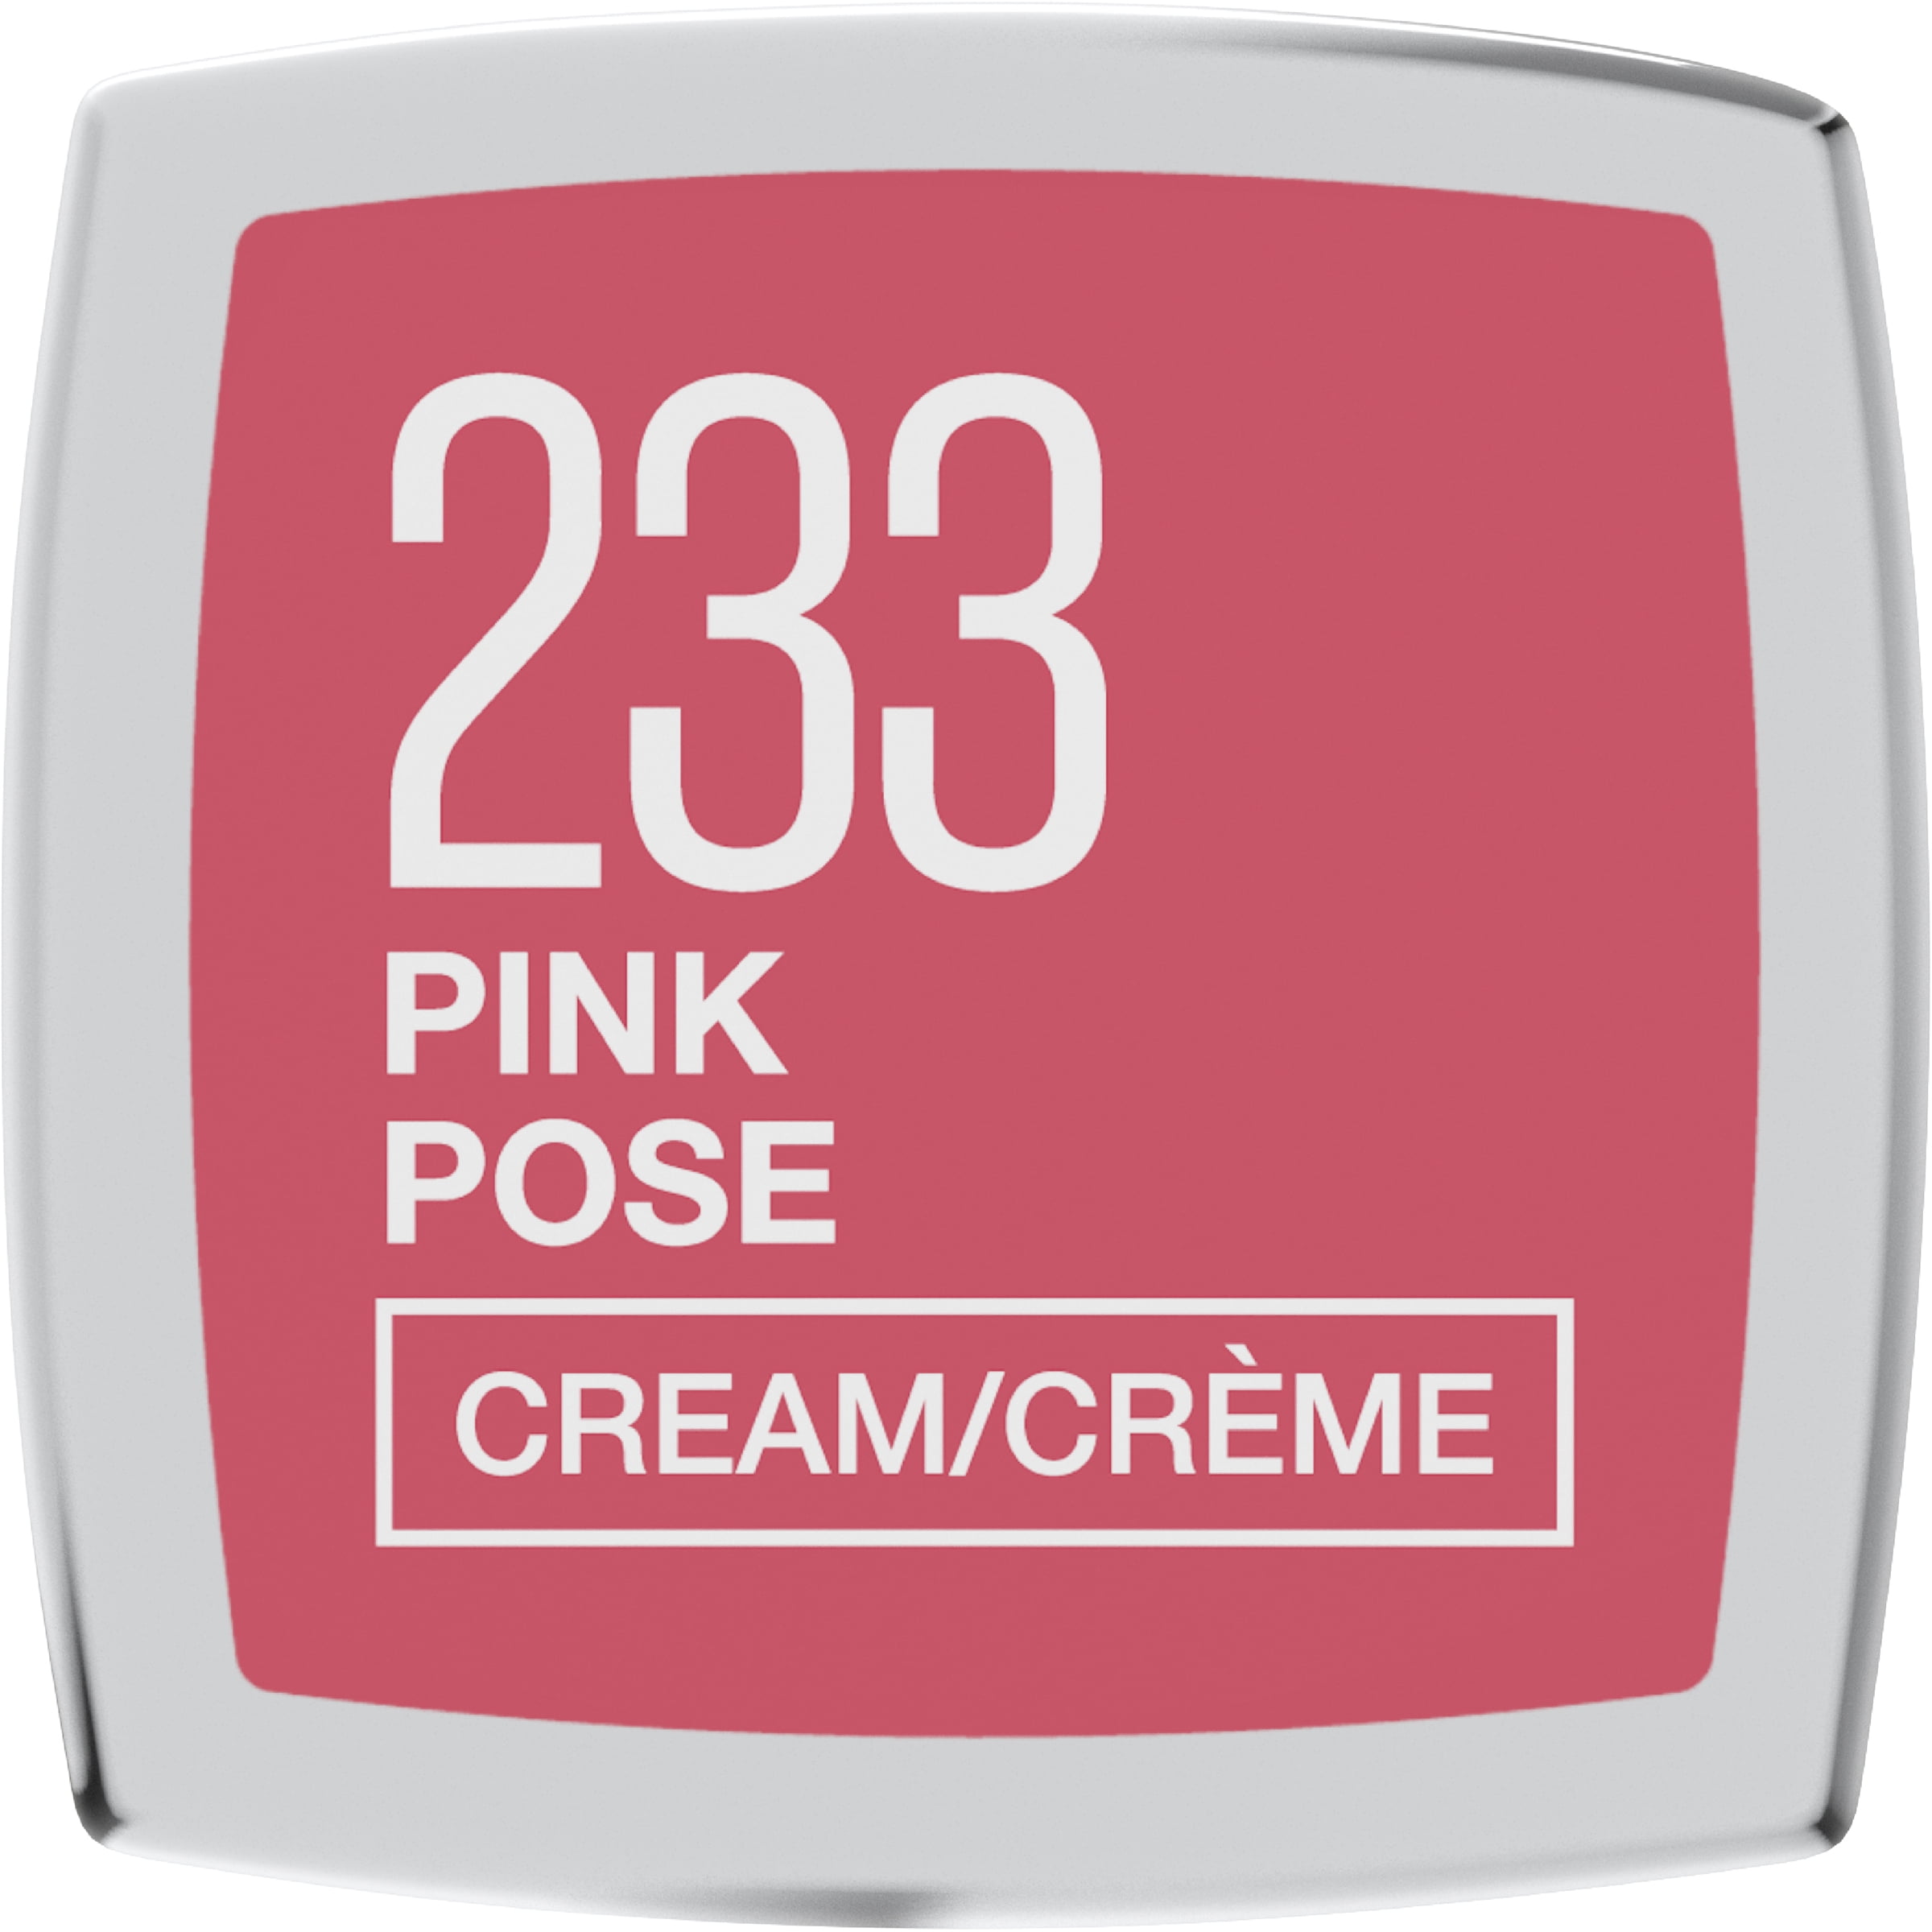 Color Sensational Finish Pose Maybelline Cream Lipstick, Pink